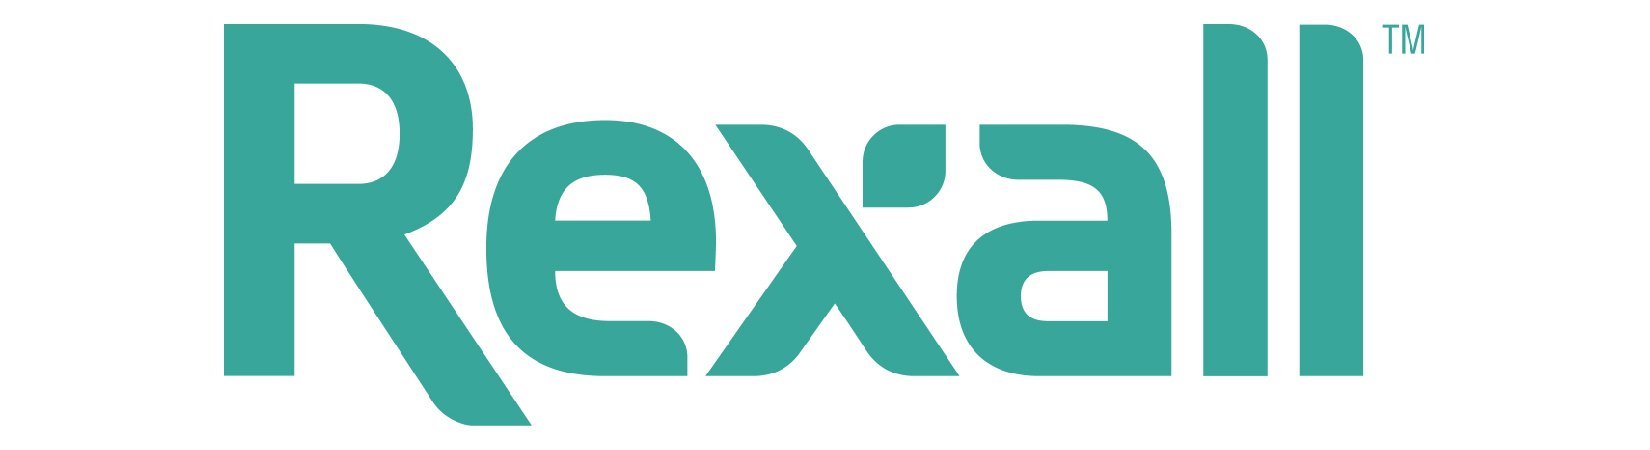 Rexall_Canada_logo2.jpg